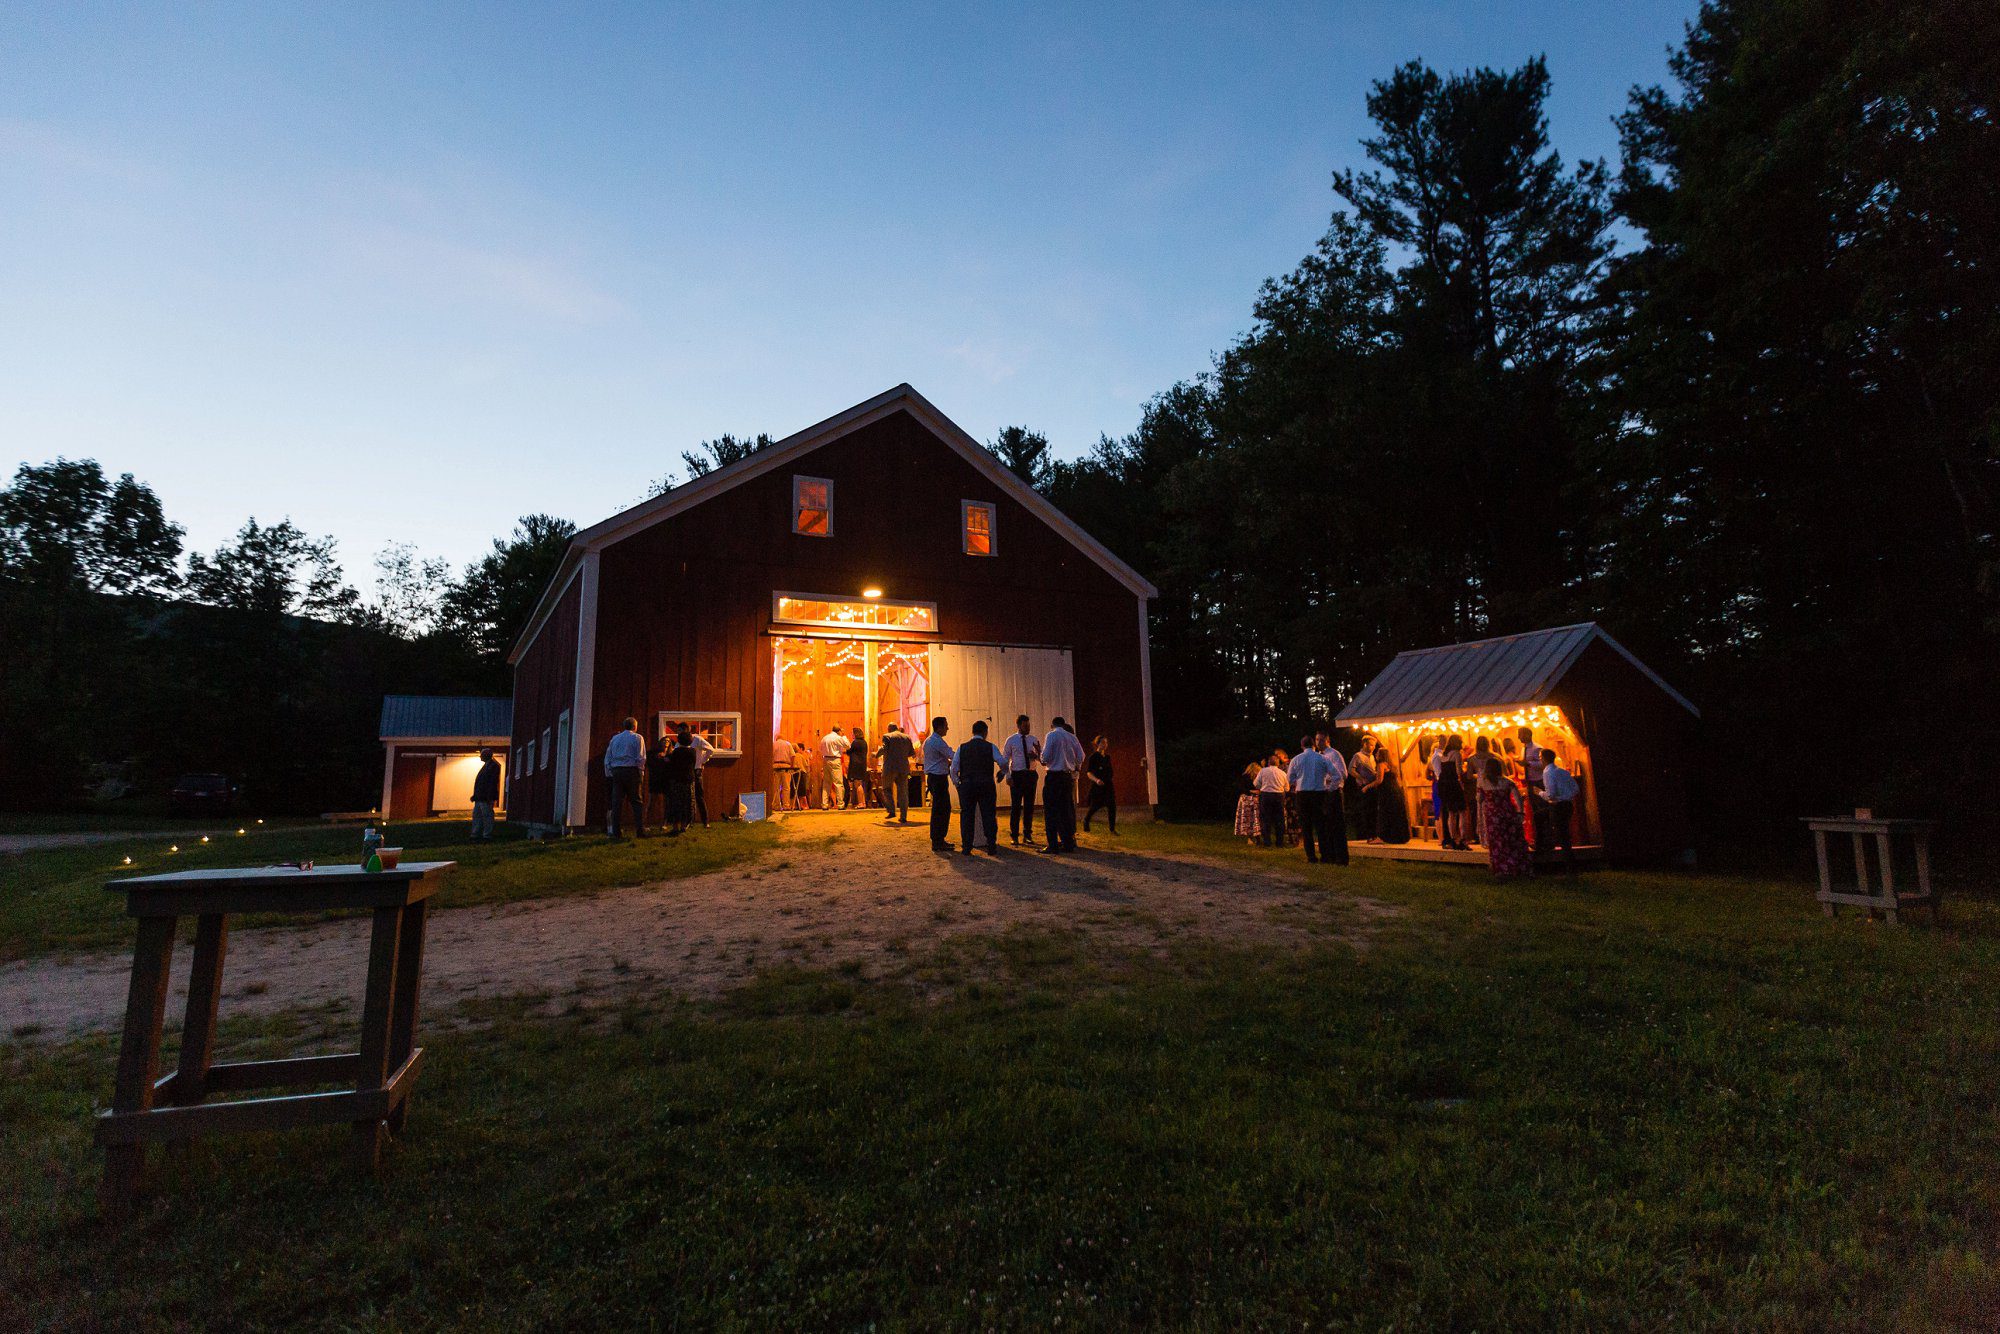 kitz farm NH barn wedding reception